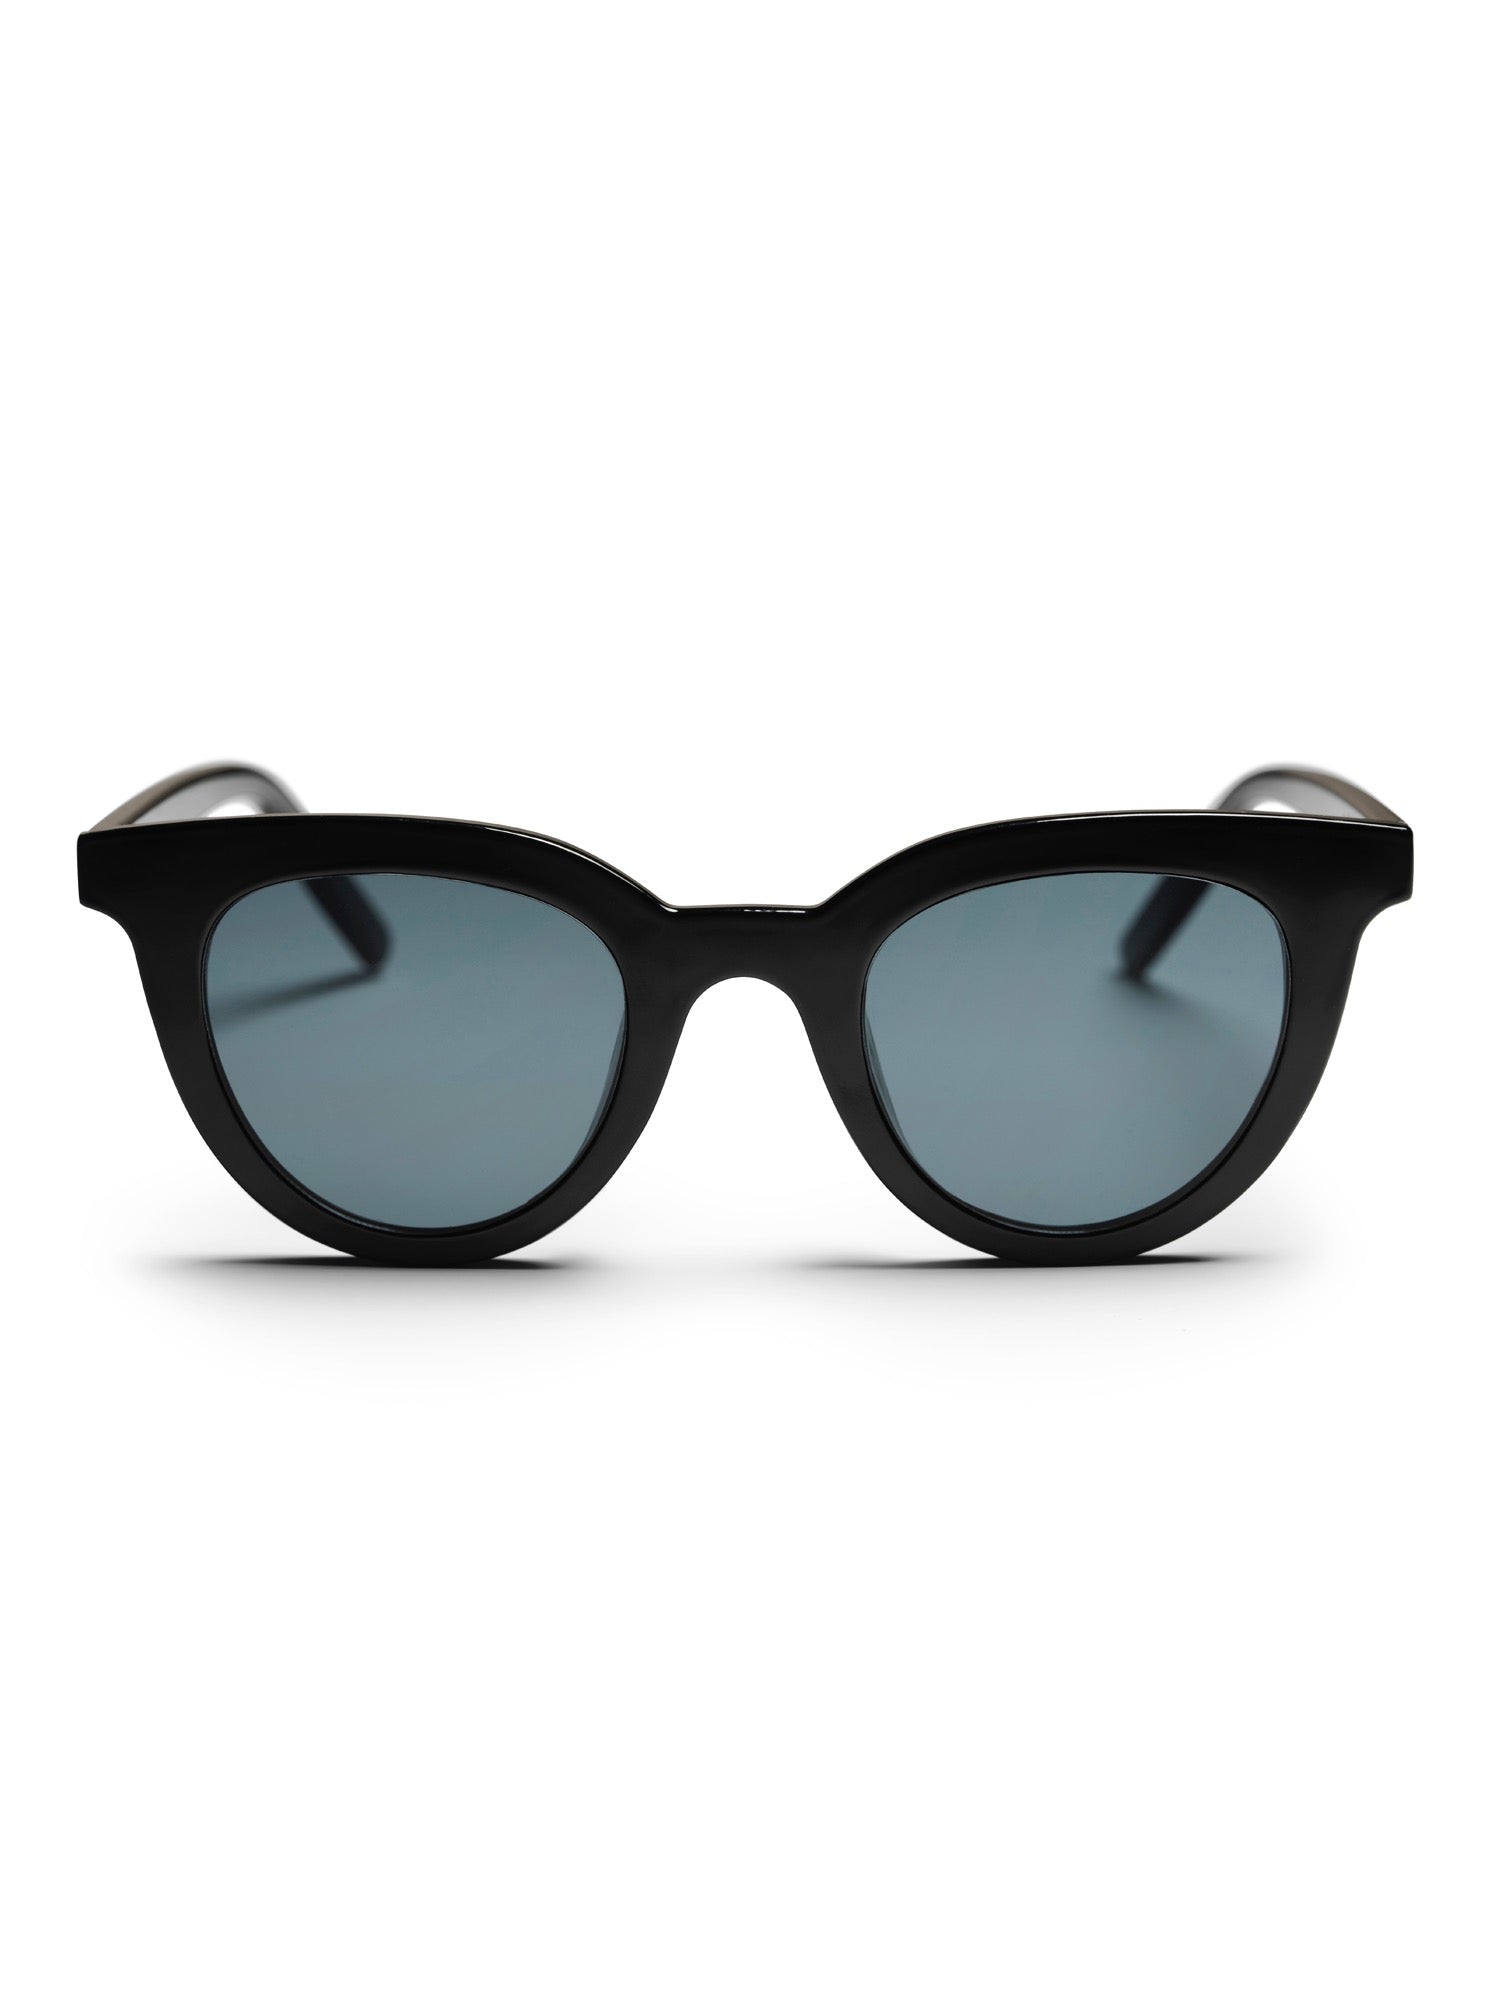 CHPO - Långholmen Sunglasses - Recycled Plastic - Weekendbee - sustainable sportswear